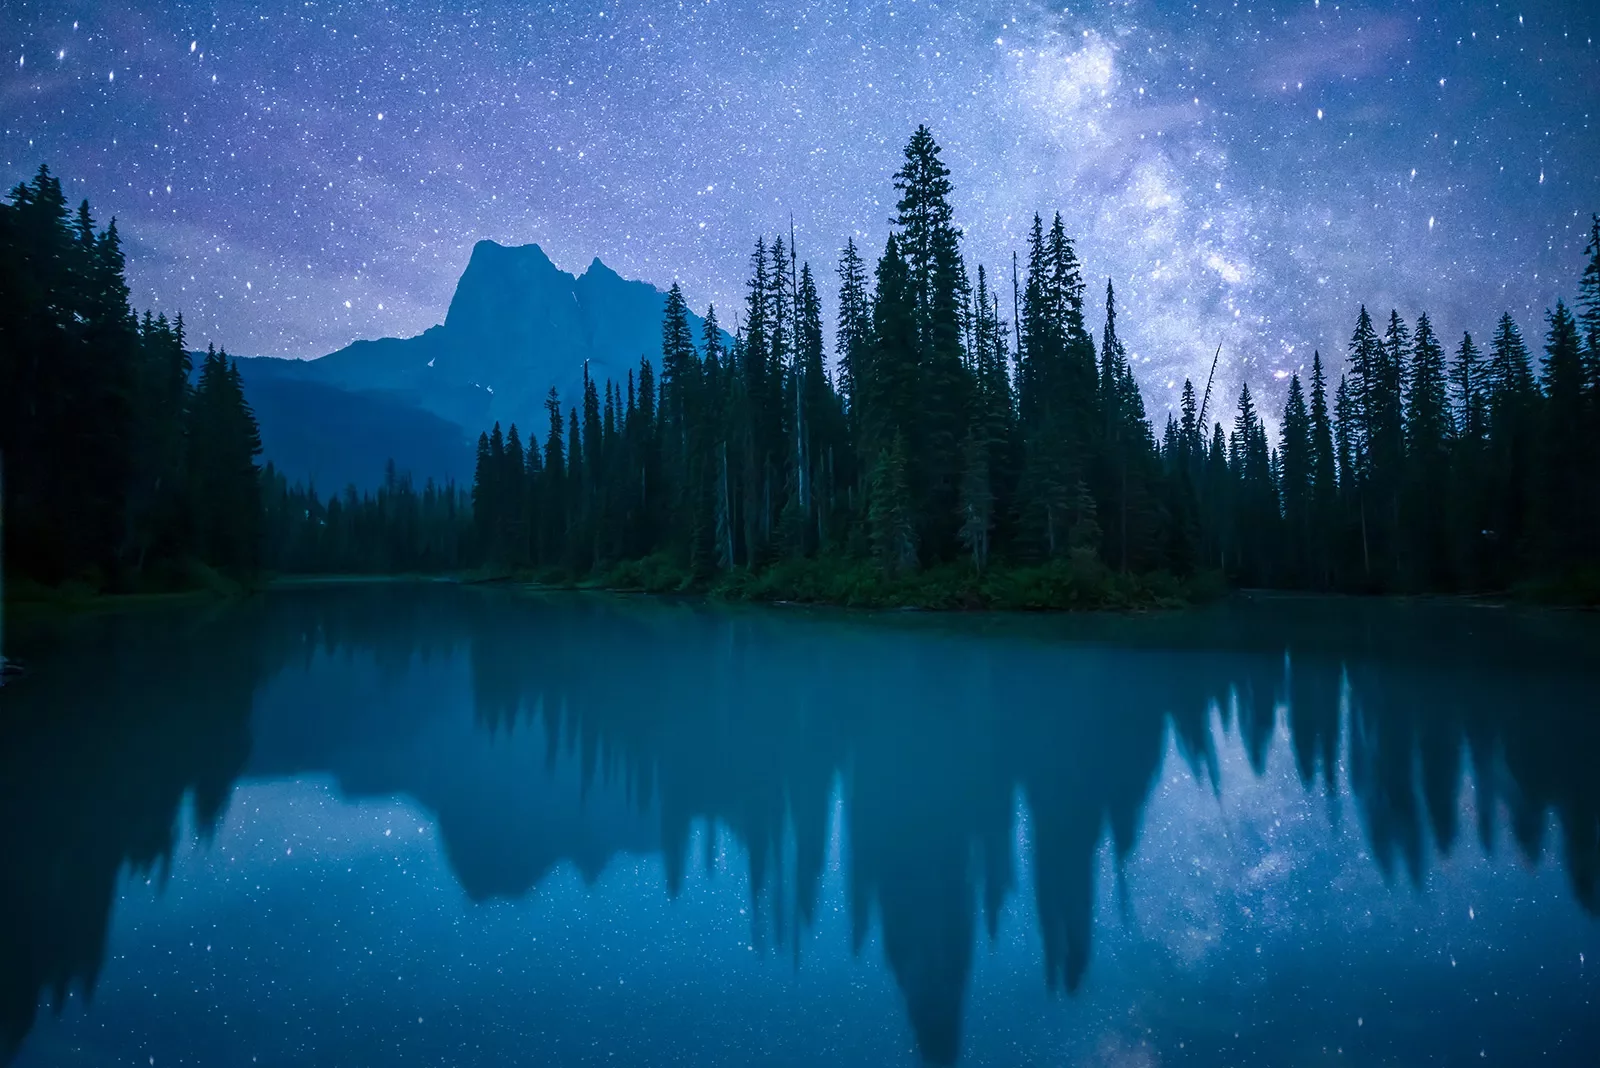 Lake, mountain, forest, vibrant nighttime vista.